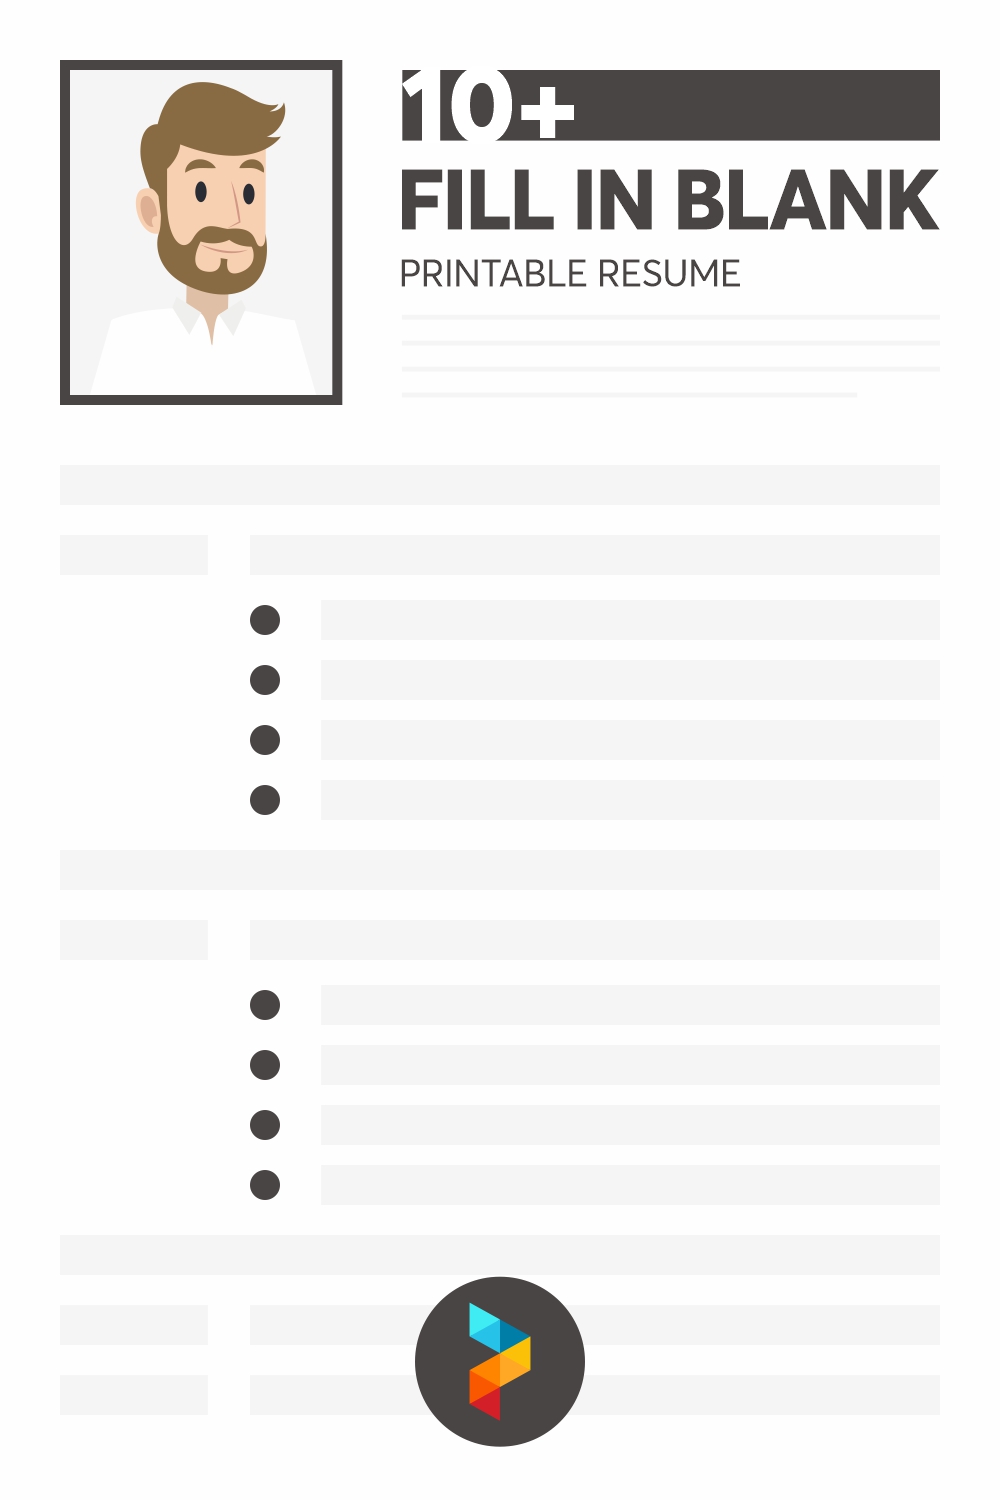 Fill In Blank Printable Resume